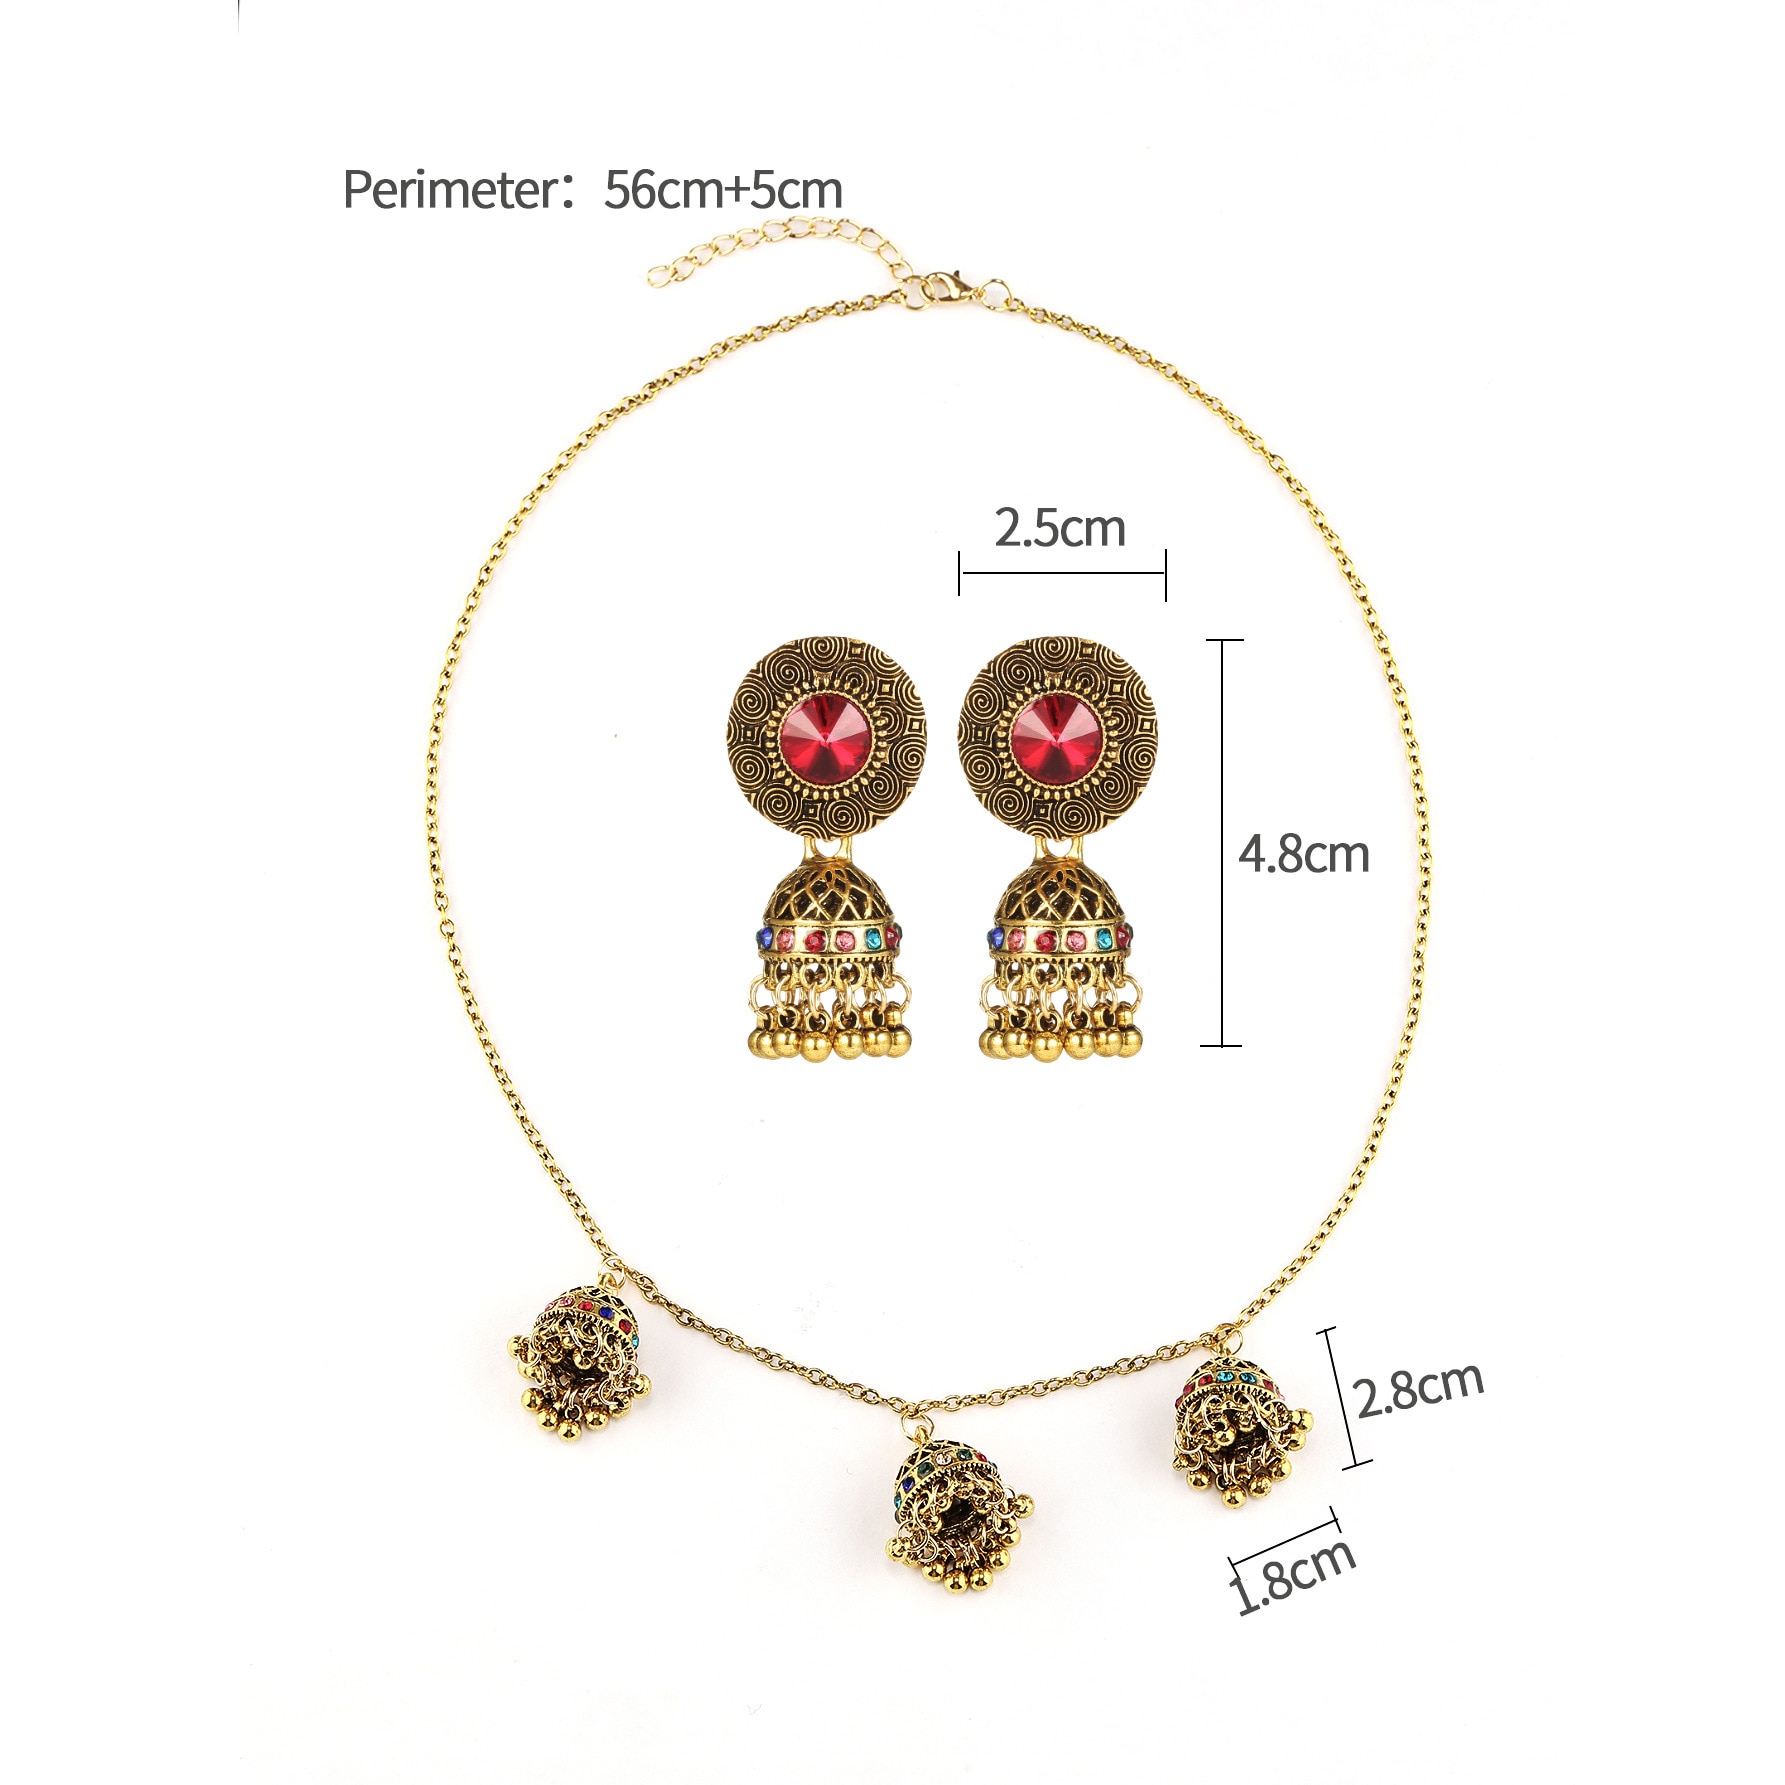 New-Women39s-Indian-Jewelry-Set-EarringNecklace-Wedding-Jewelry-Hangers-Luxury-Retro-Red-CZ-Geometry-3256804349980623-6